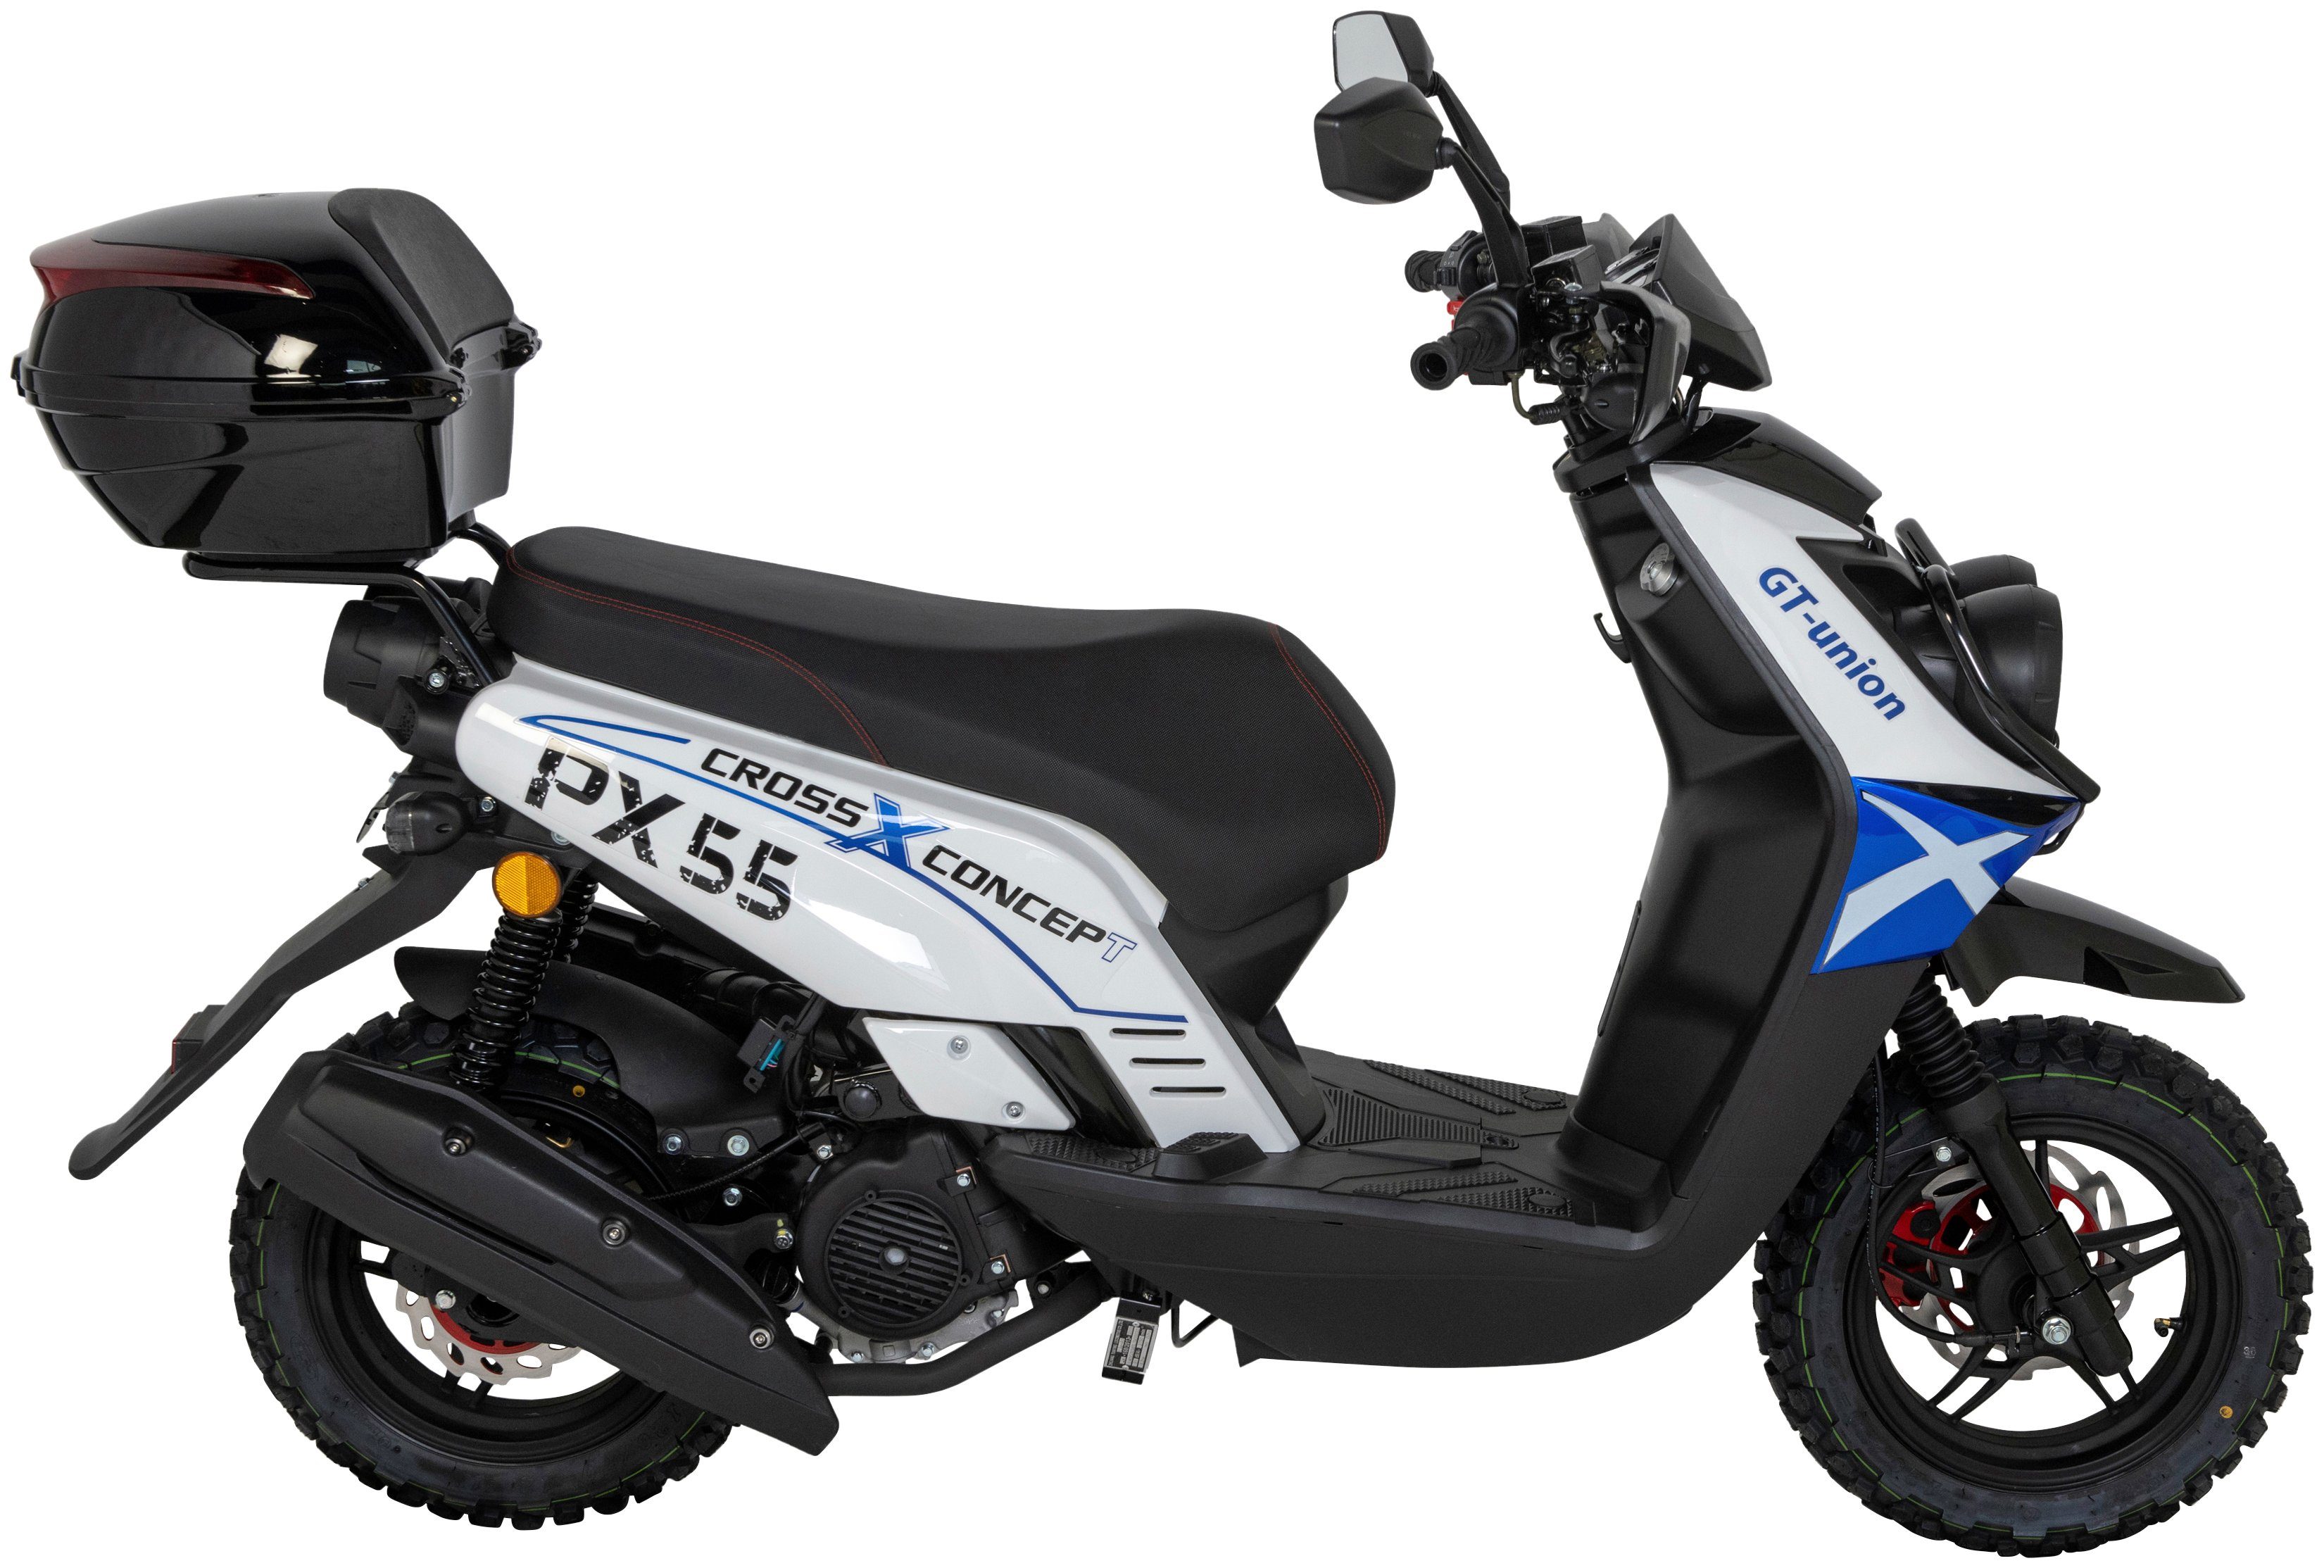 Topcase UNION ccm, 5, 55 Euro 50 km/h, (Set), Cross-Concept, PX 45 Motorroller mit GT